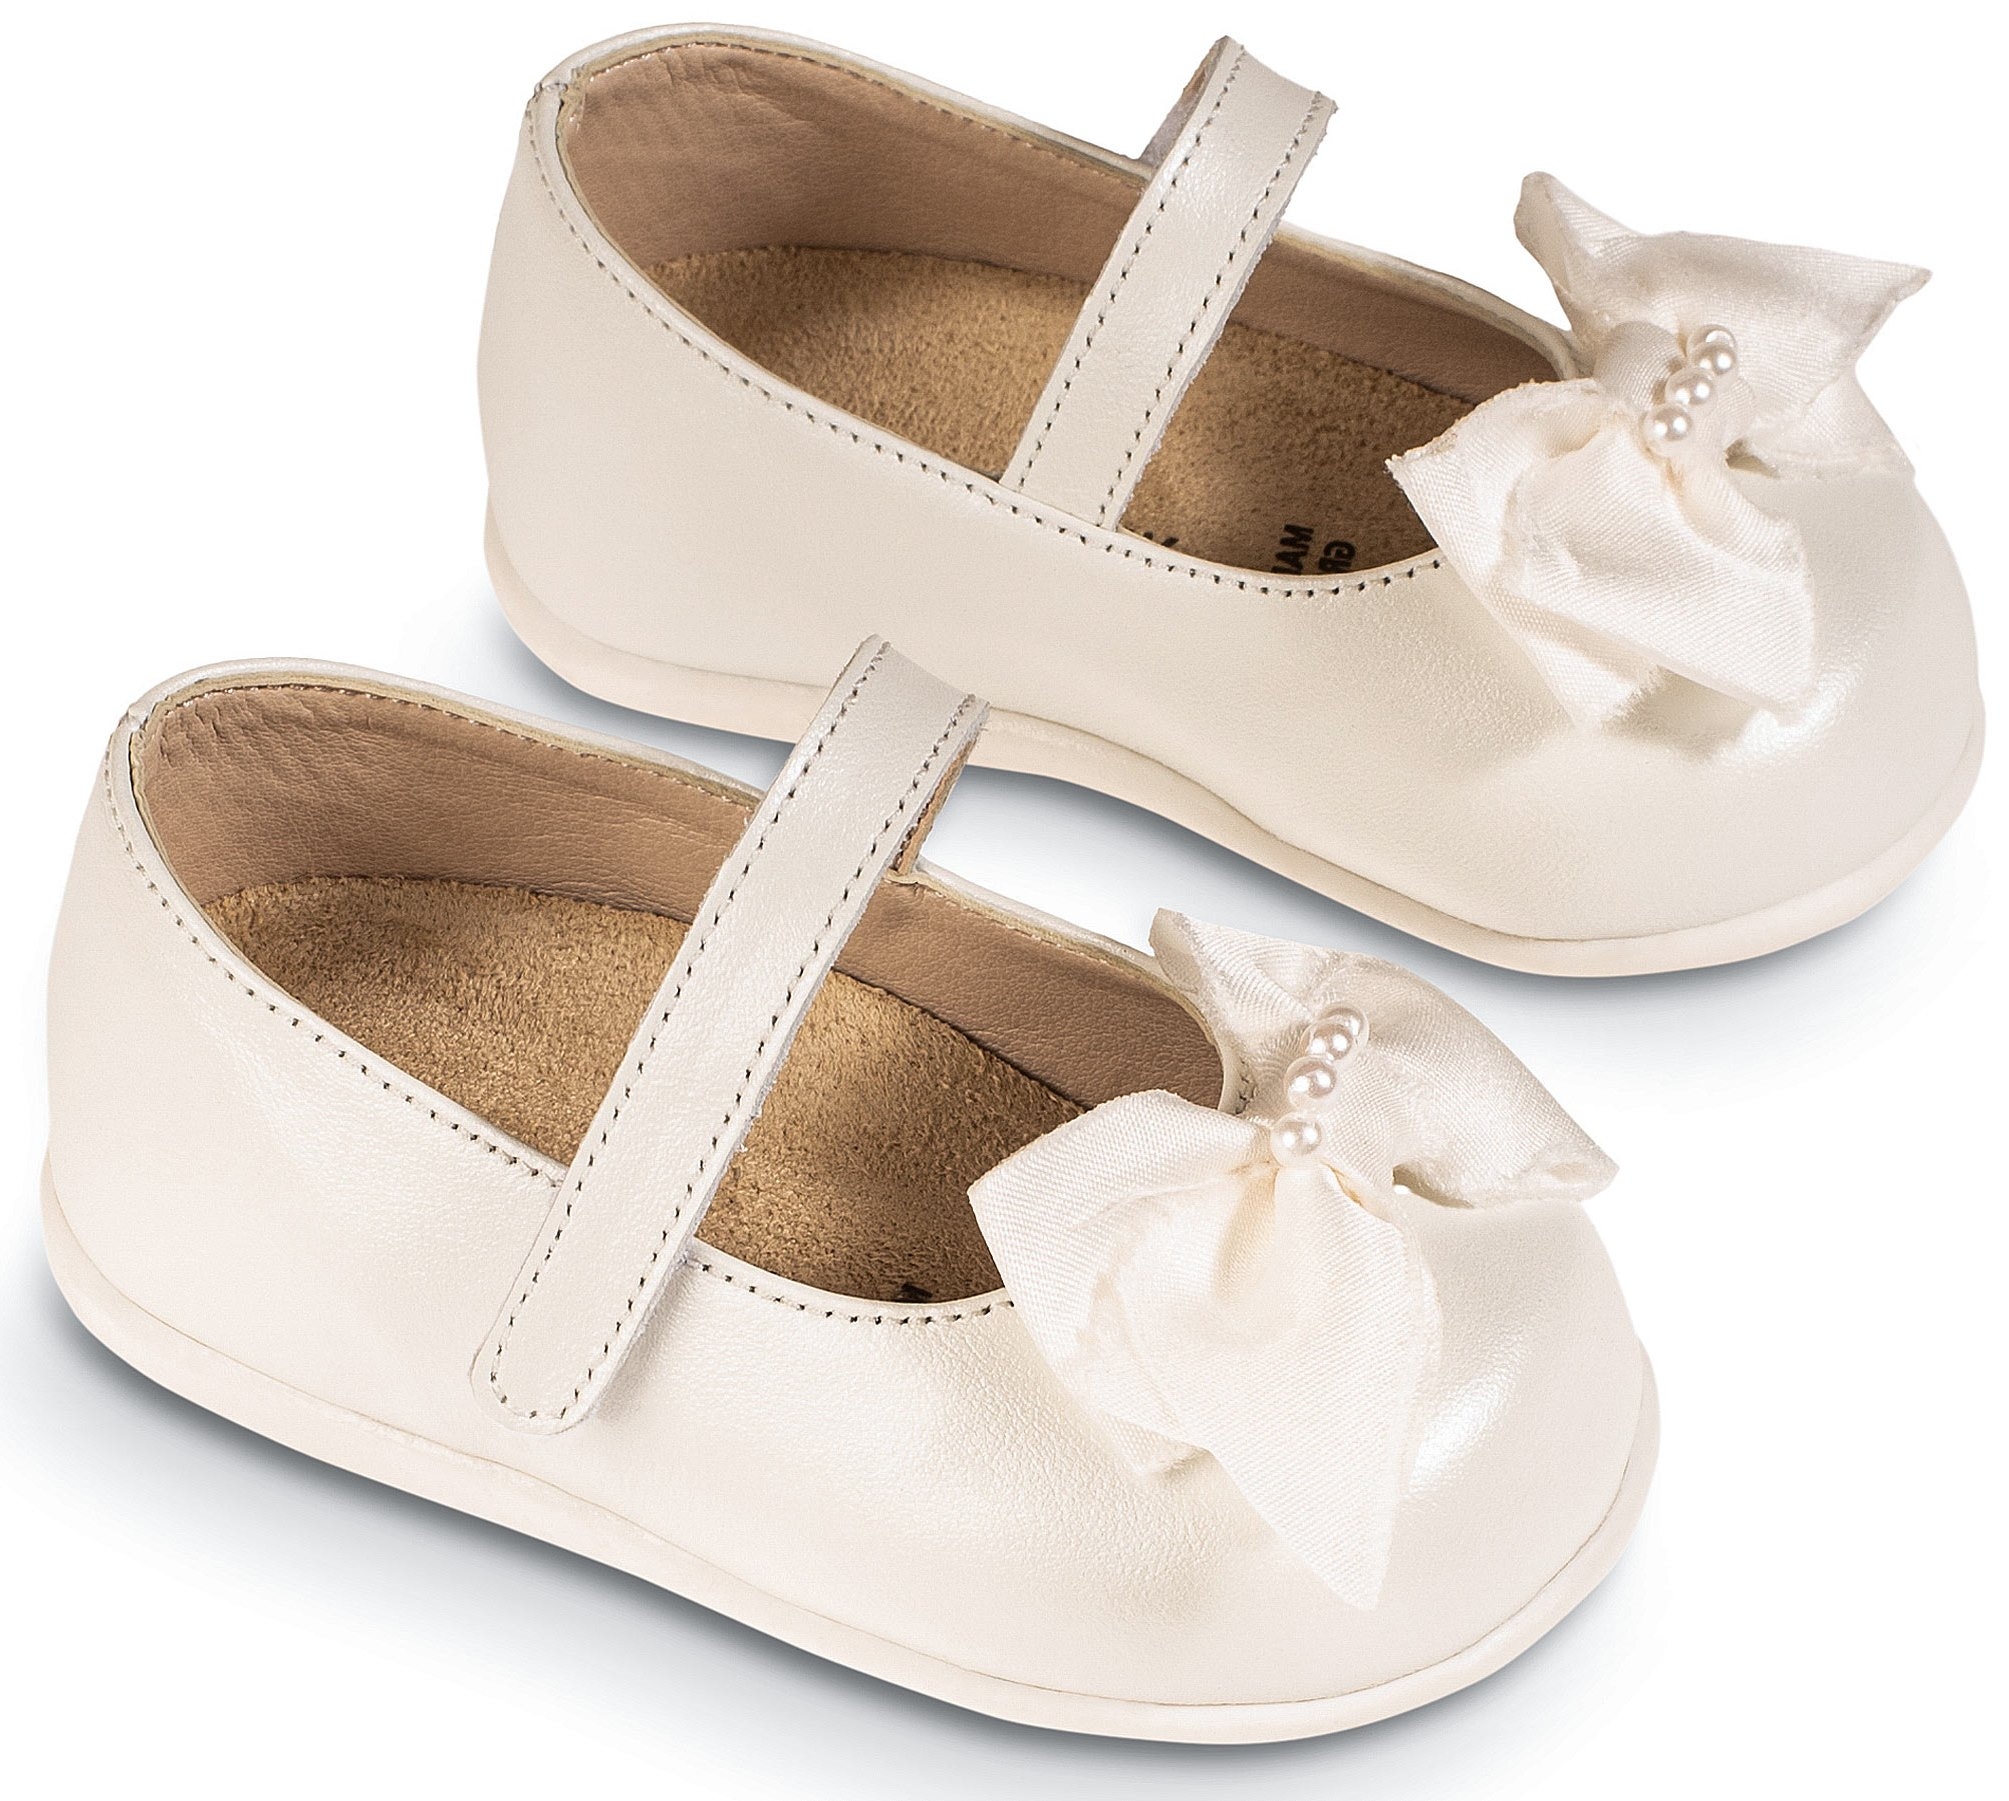 Babywalker Satin Εκρού φιογκάκι - Βαπτιστικά παπούτσια για κορίτσι